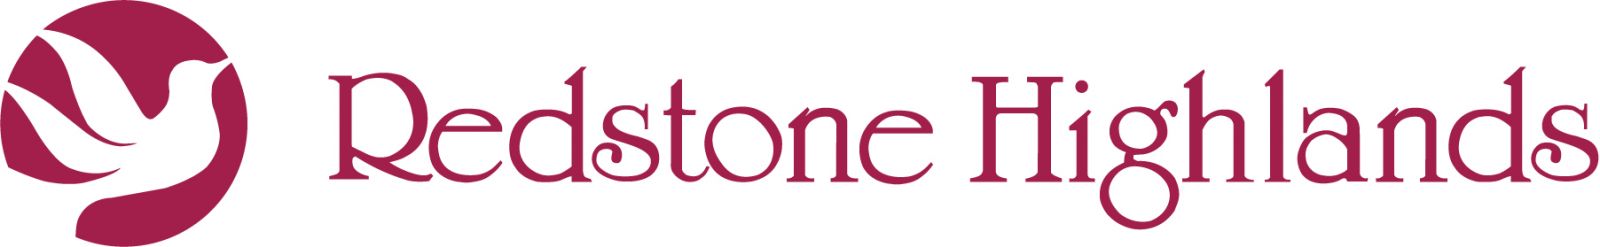 Logo Redstone pms208